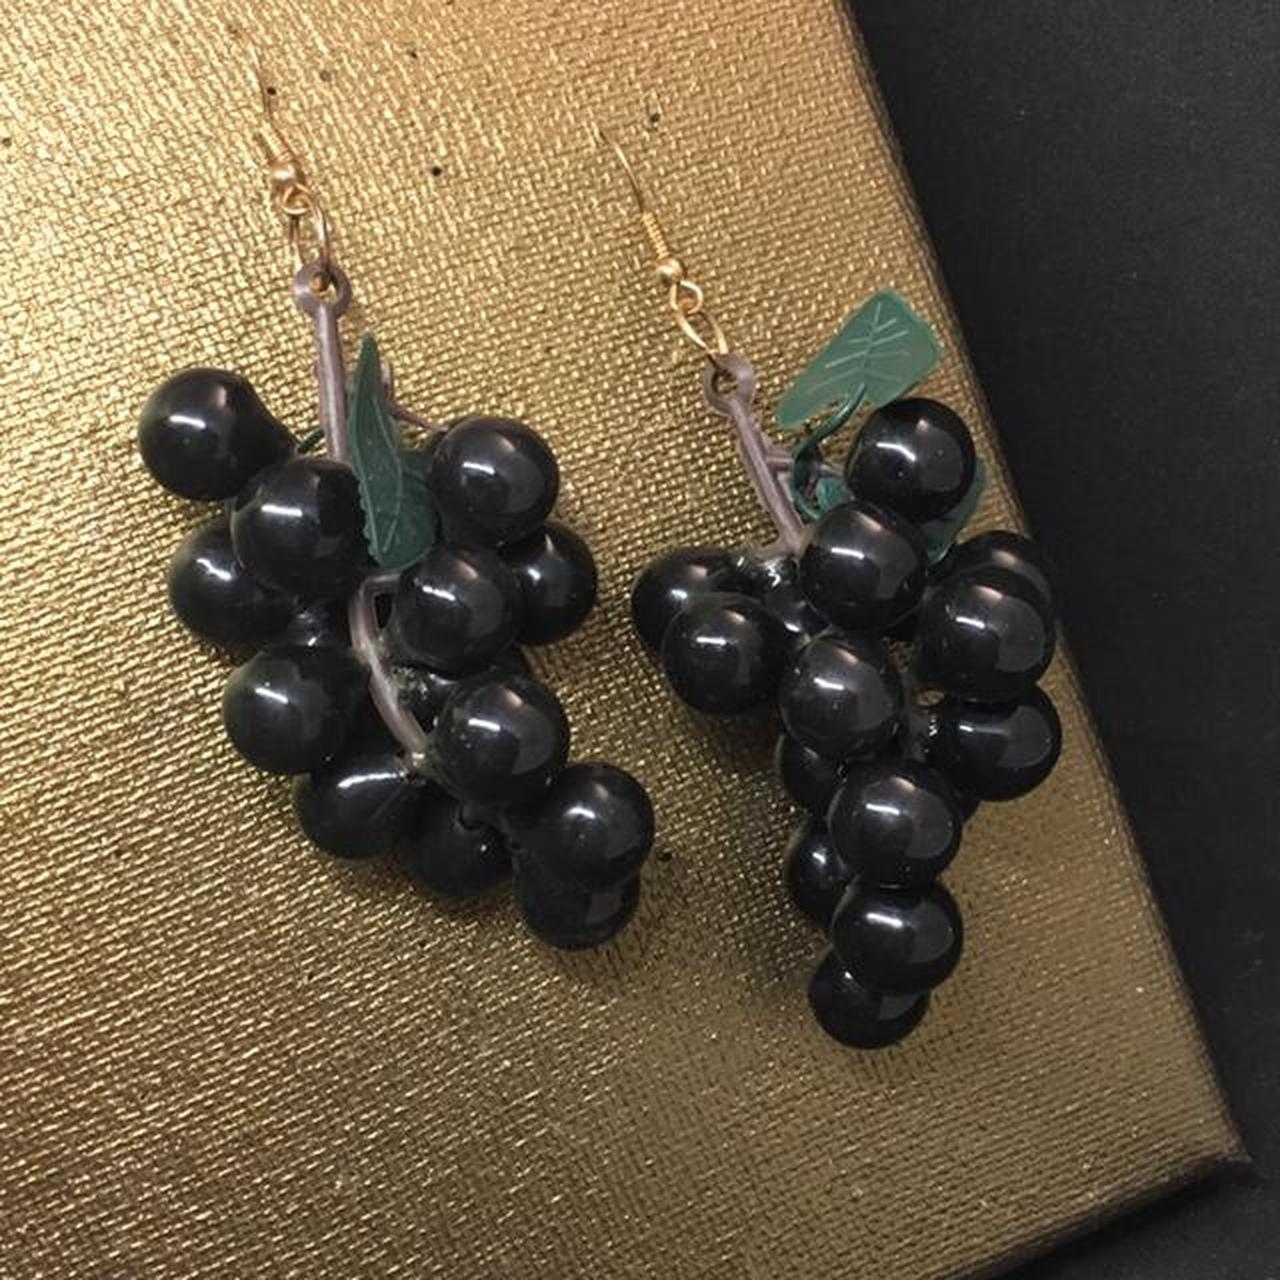 Product Image 1 - Black grape fruit earrings! 🍇